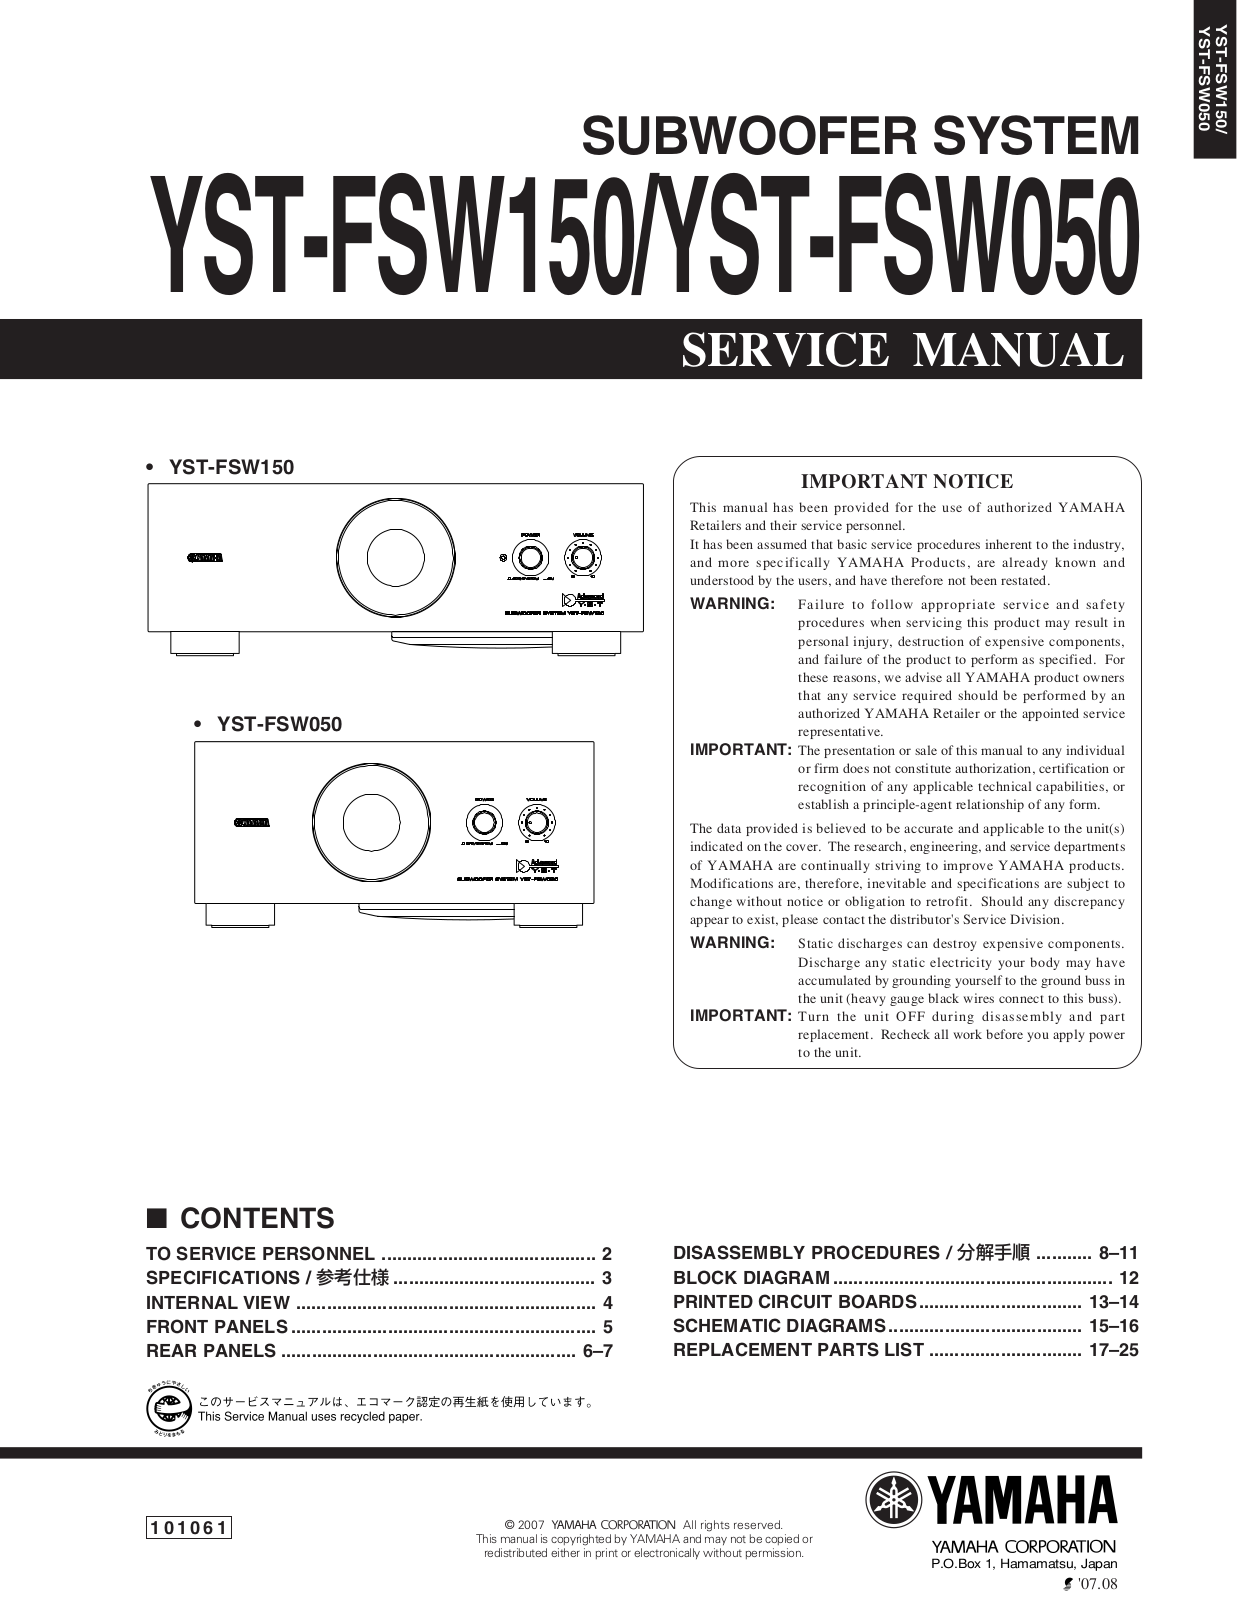 Yamaha YSTFSW-050, YSTFSW-150 Service manual